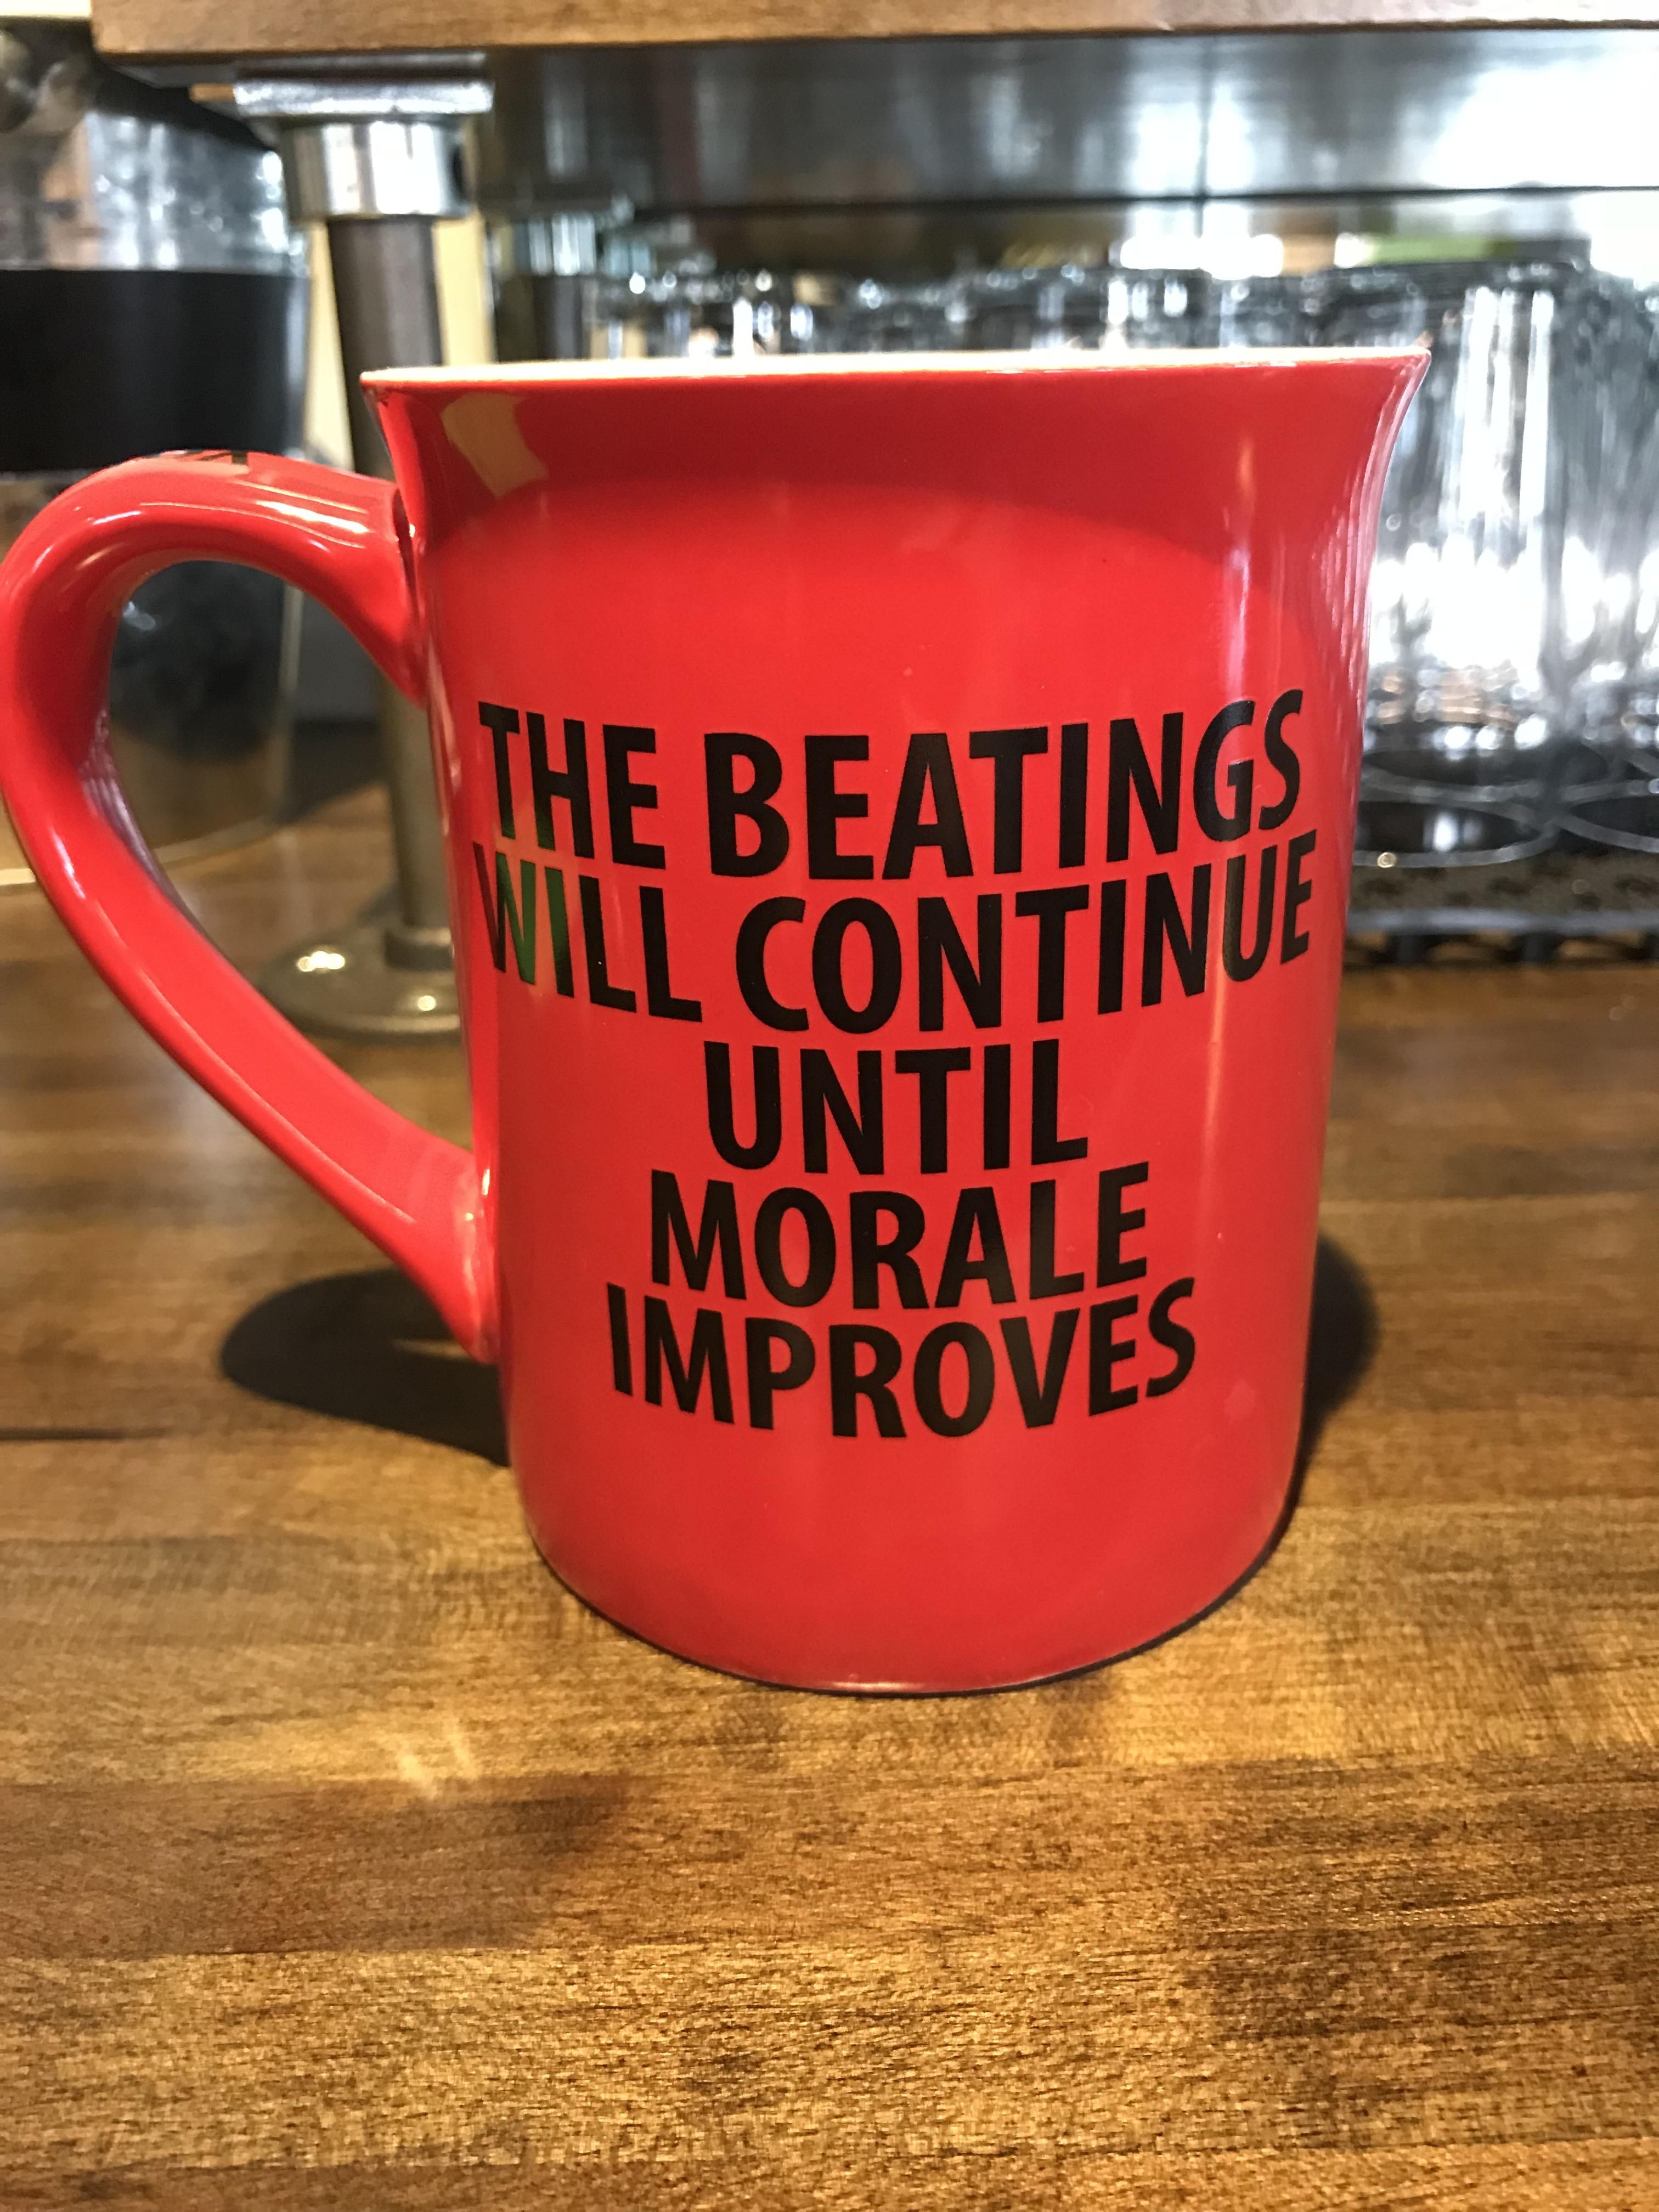 My boss’s coffee mug